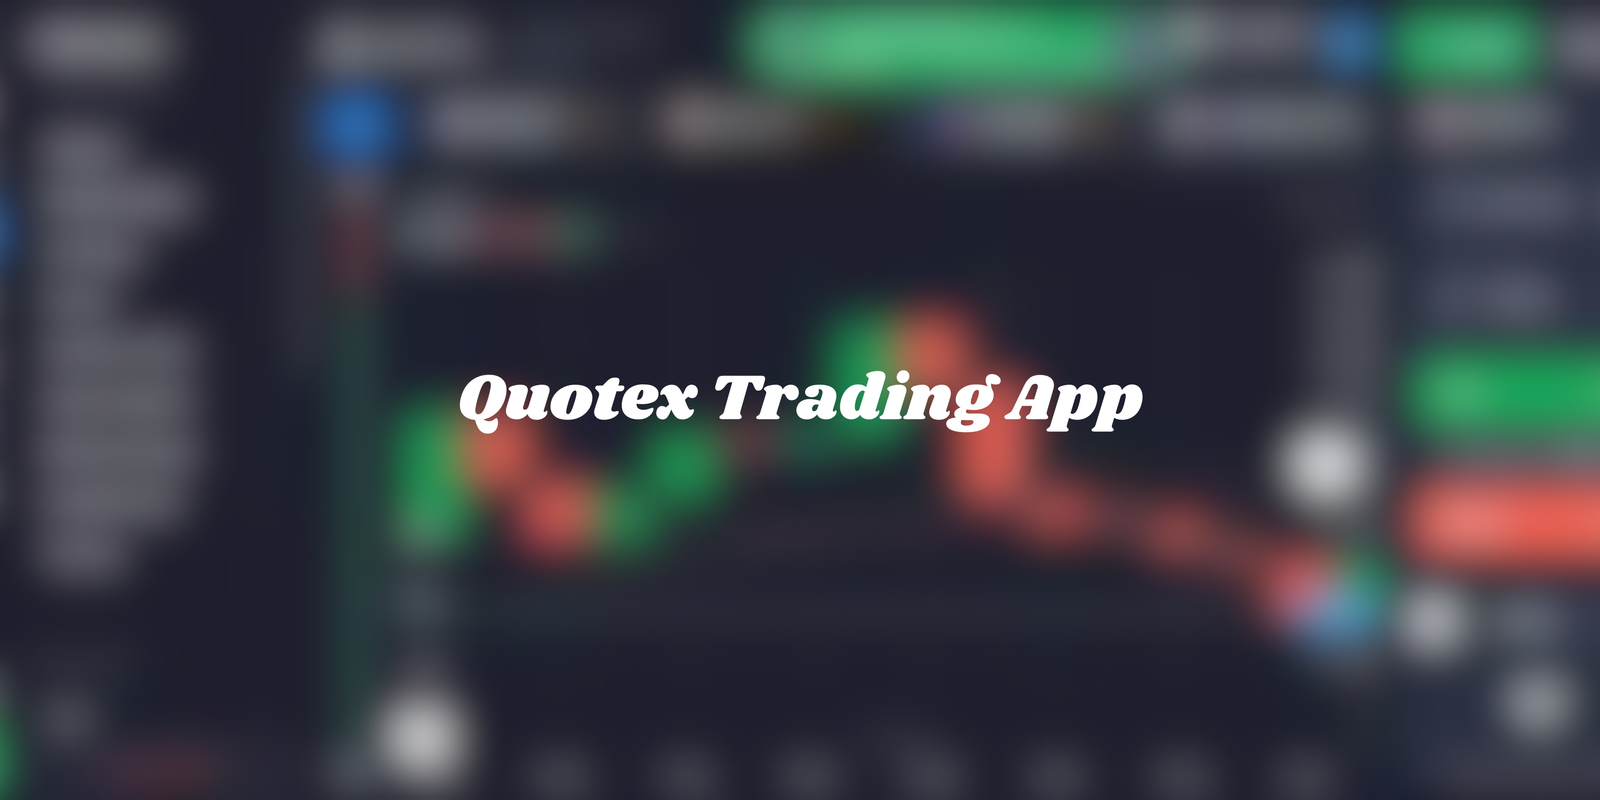 Quotex Trading App